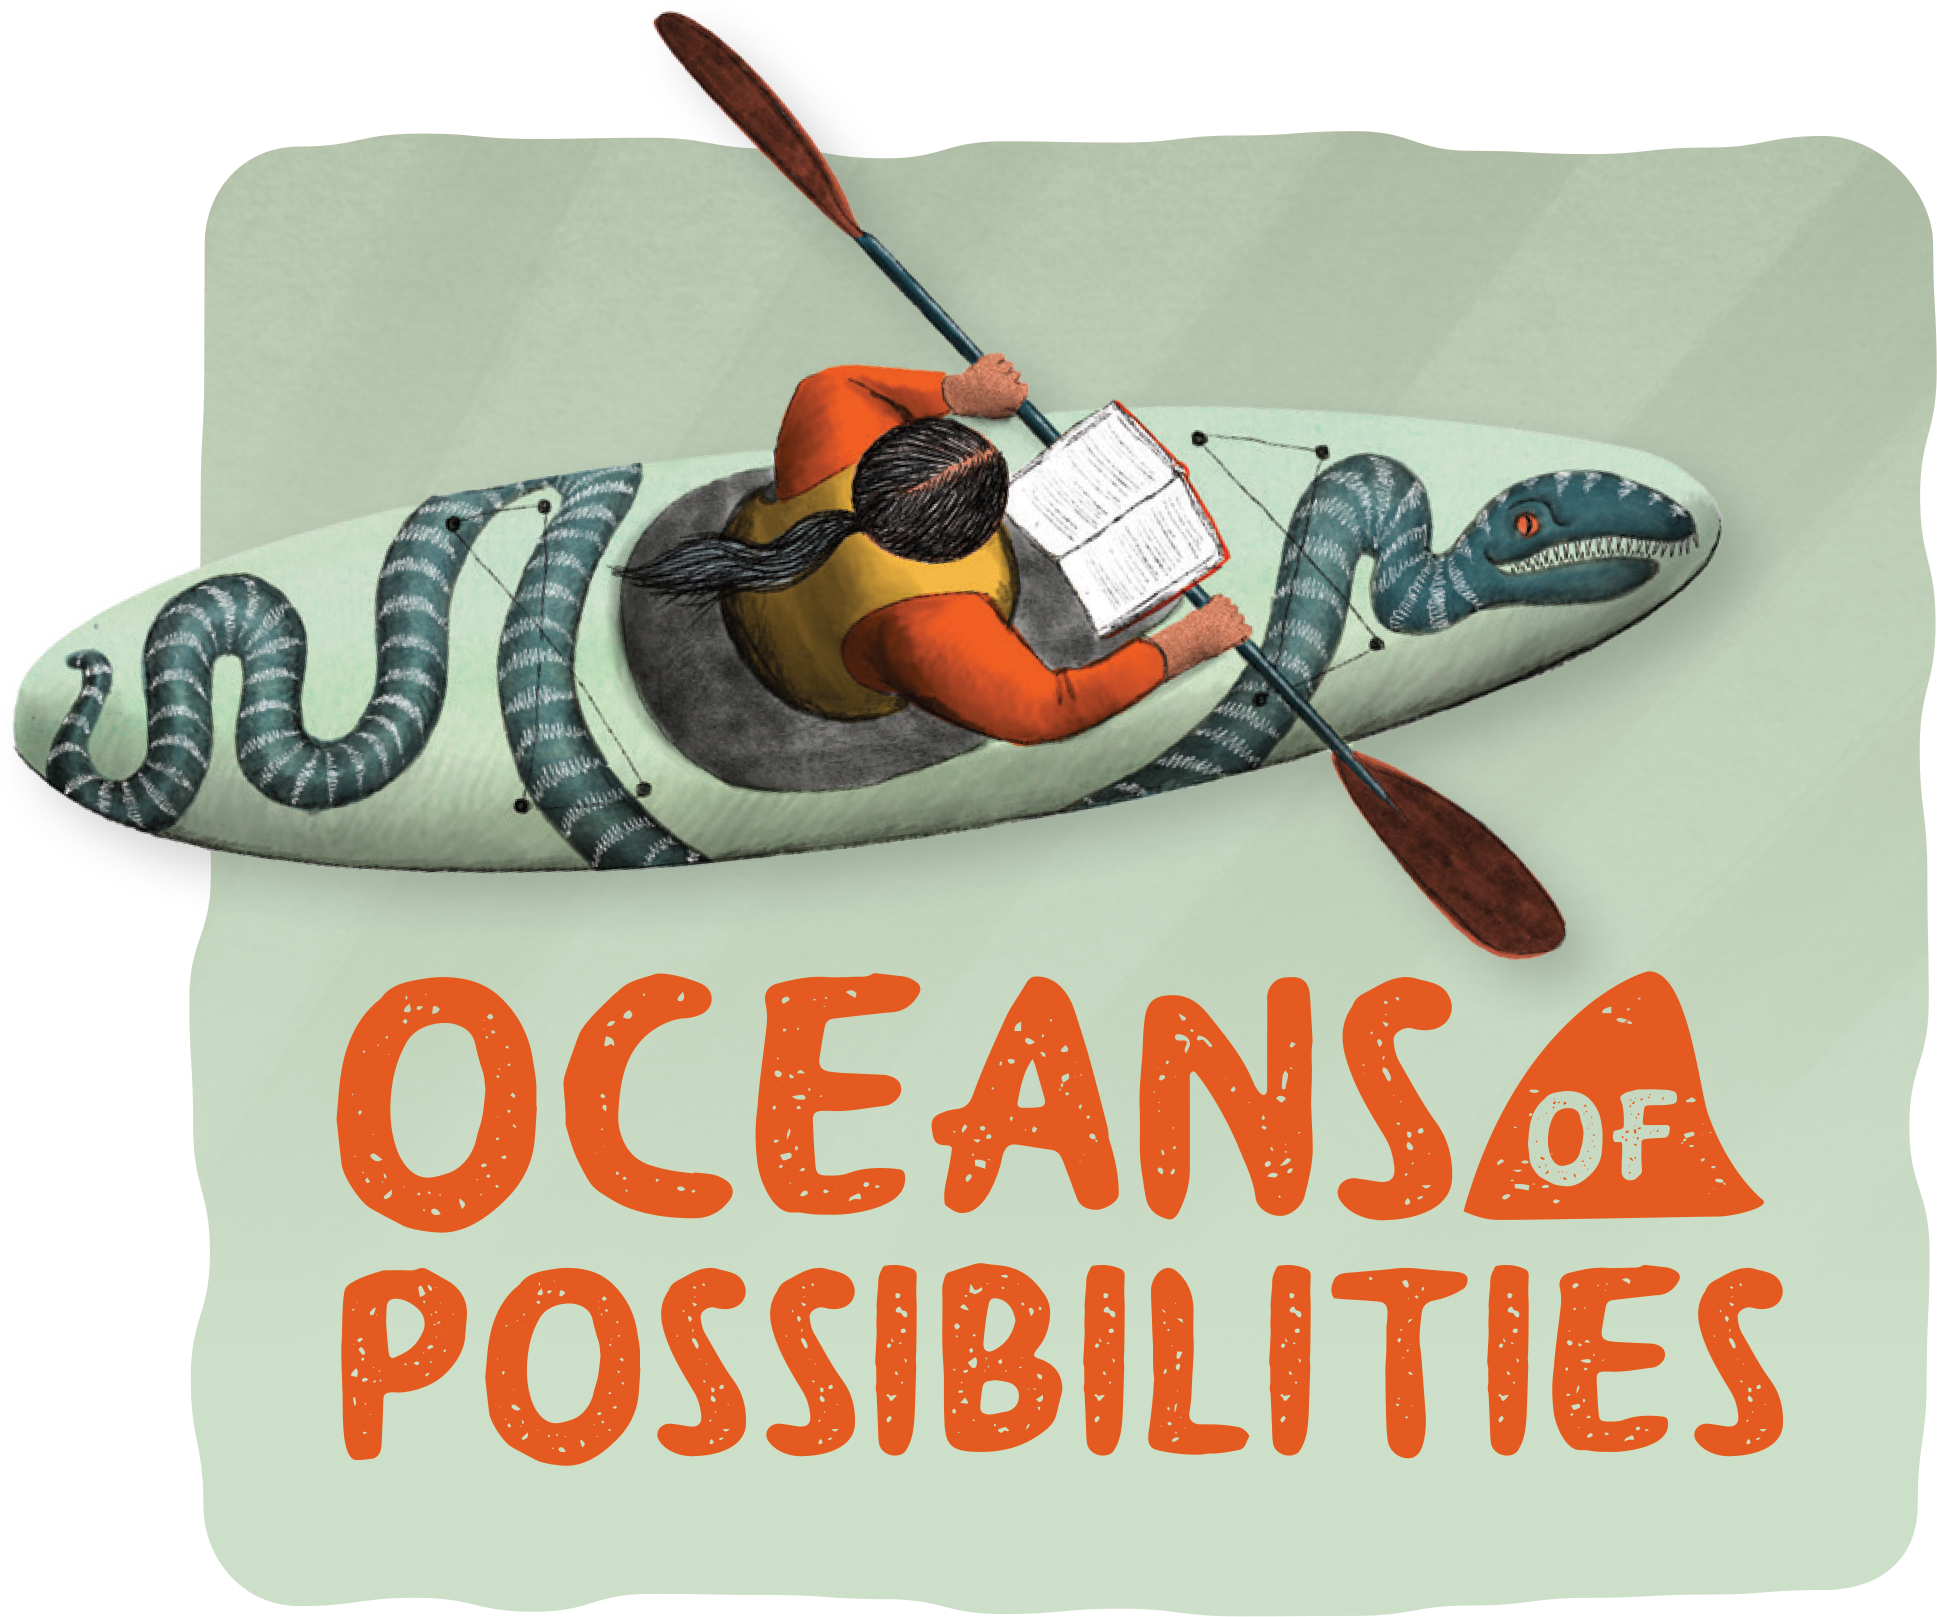 2020 CSLP Oceans of Possibilities Summer Reading text logo